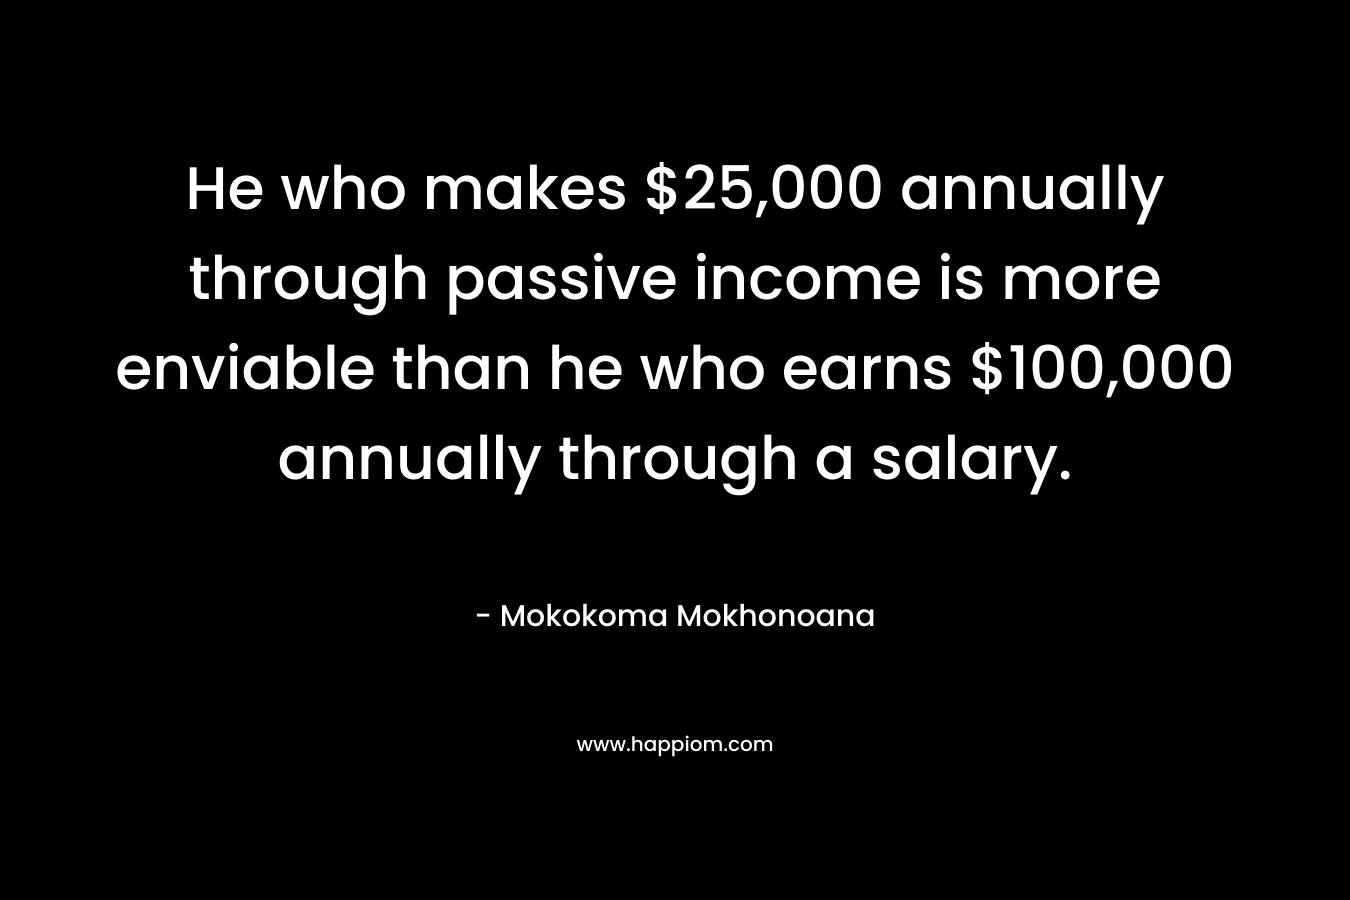 He who makes $25,000 annually through passive income is more enviable than he who earns $100,000 annually through a salary. – Mokokoma Mokhonoana